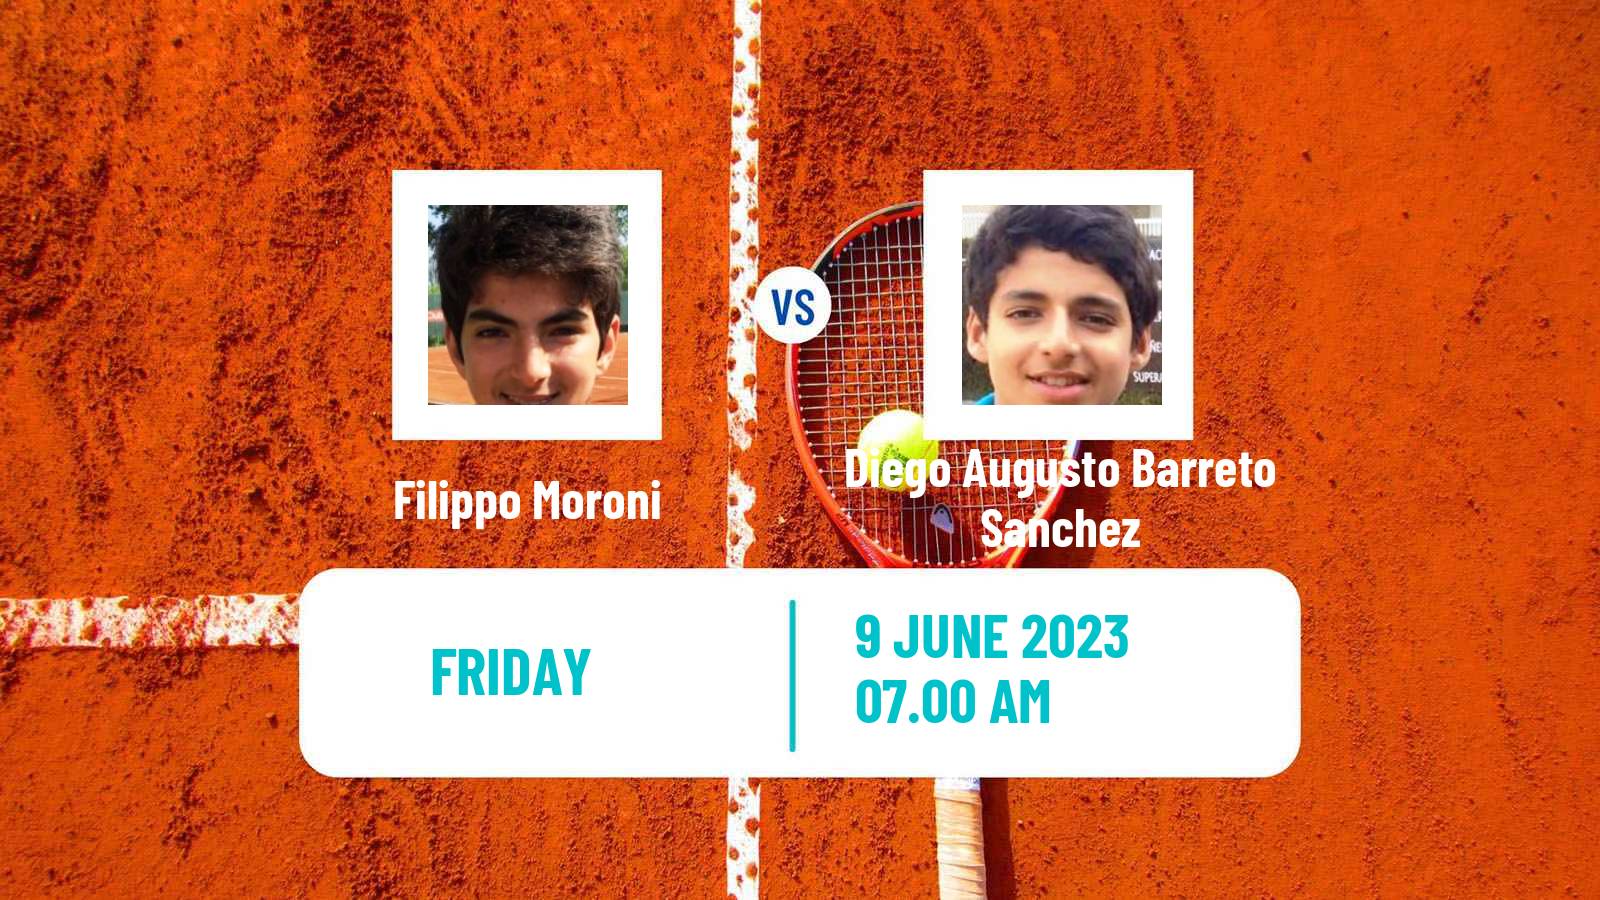 Tennis ITF M15 Tanger Men Filippo Moroni - Diego Augusto Barreto Sanchez